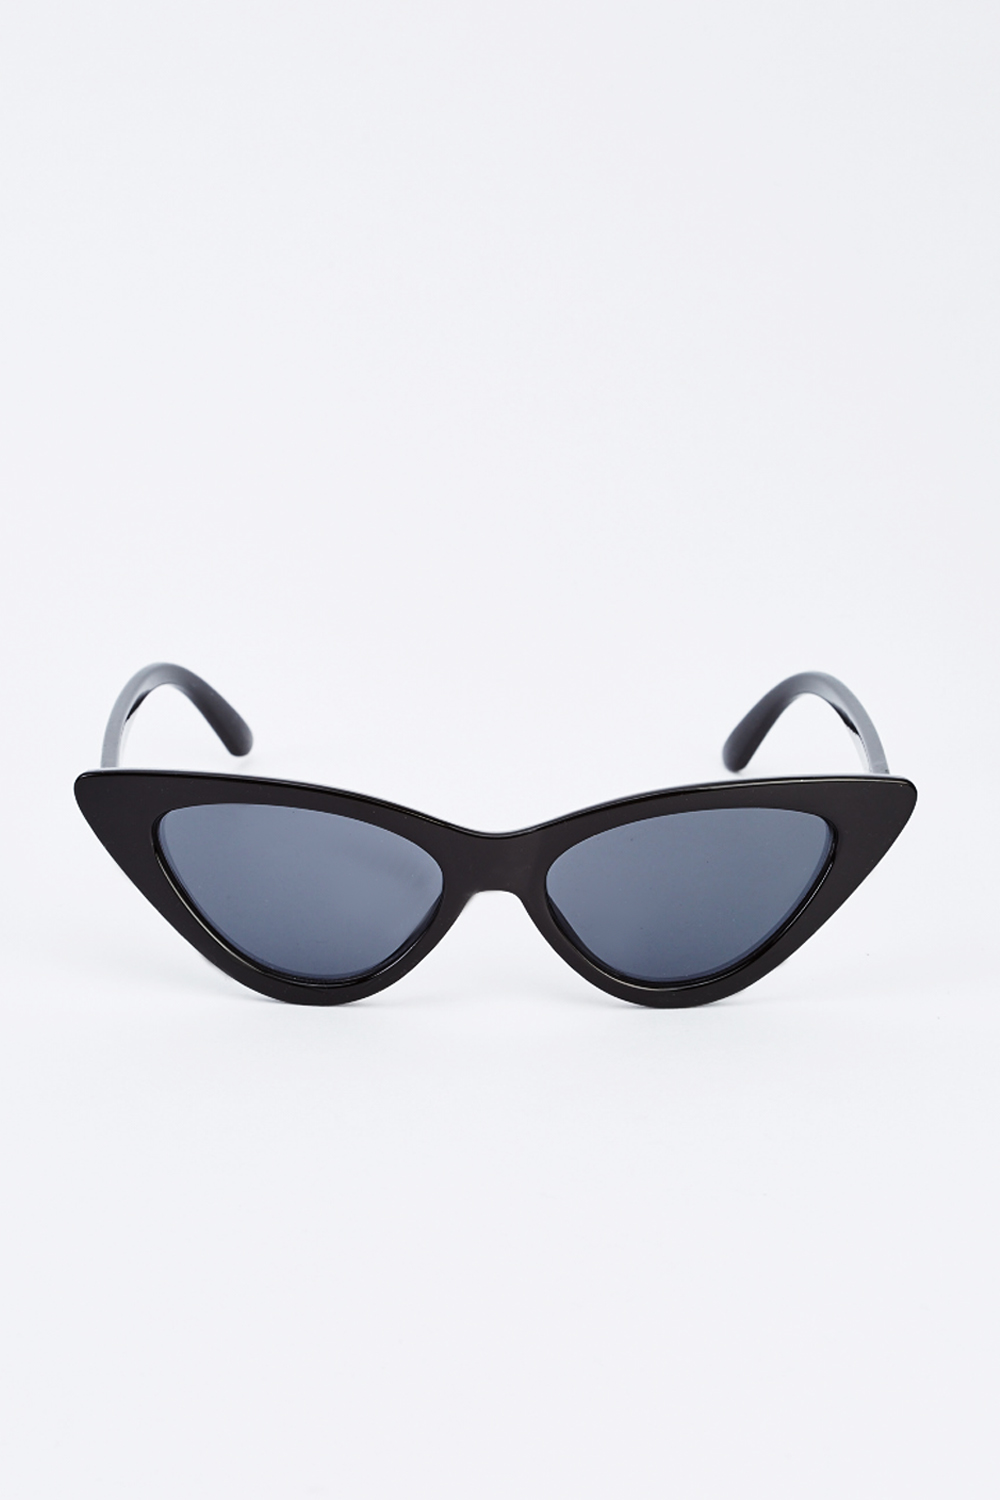 Black Thin Cat Eye Sunglasses - Just $7